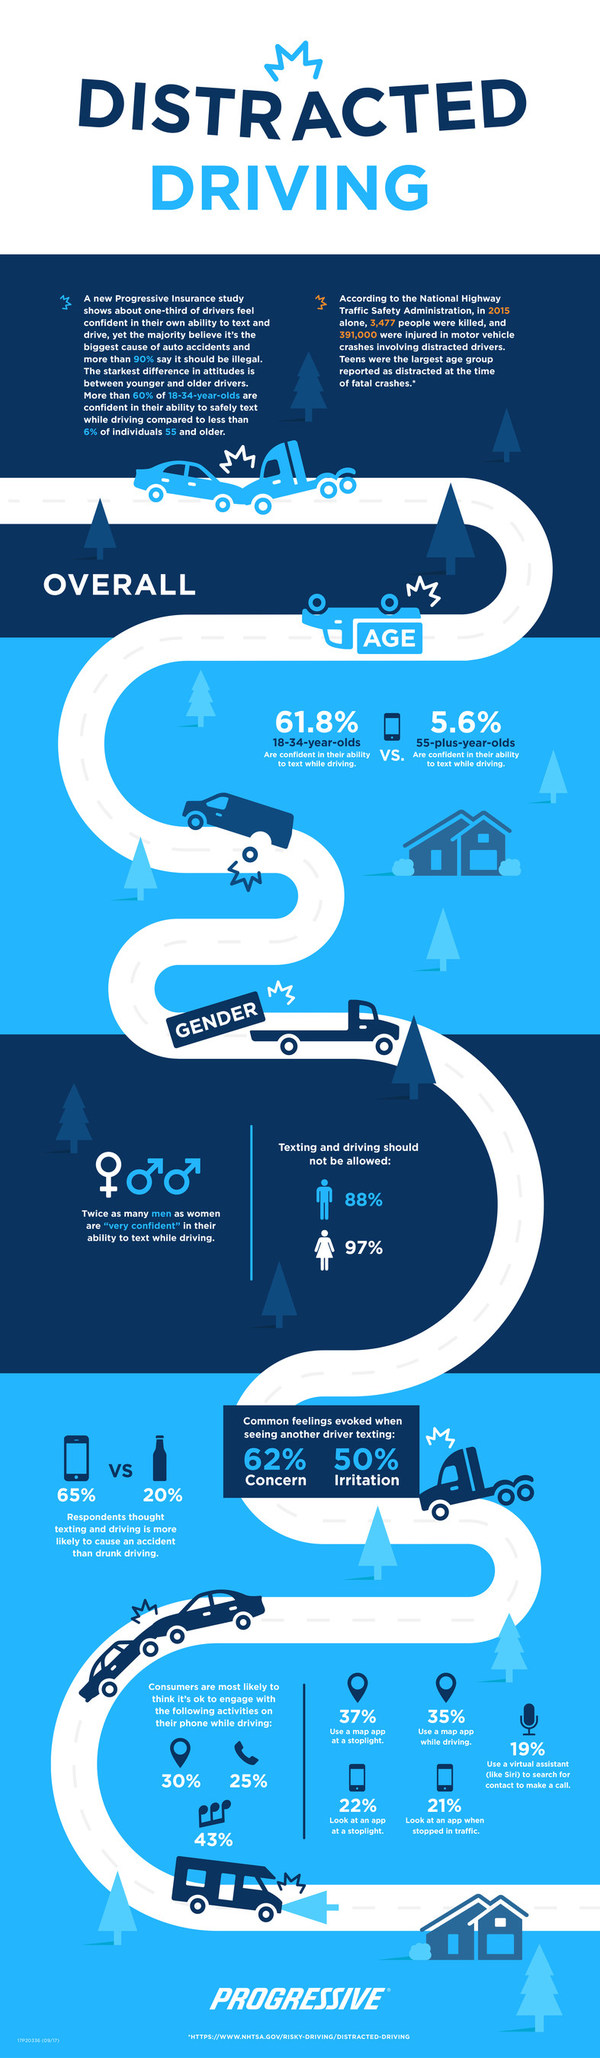 Progressive Insurance Infographic